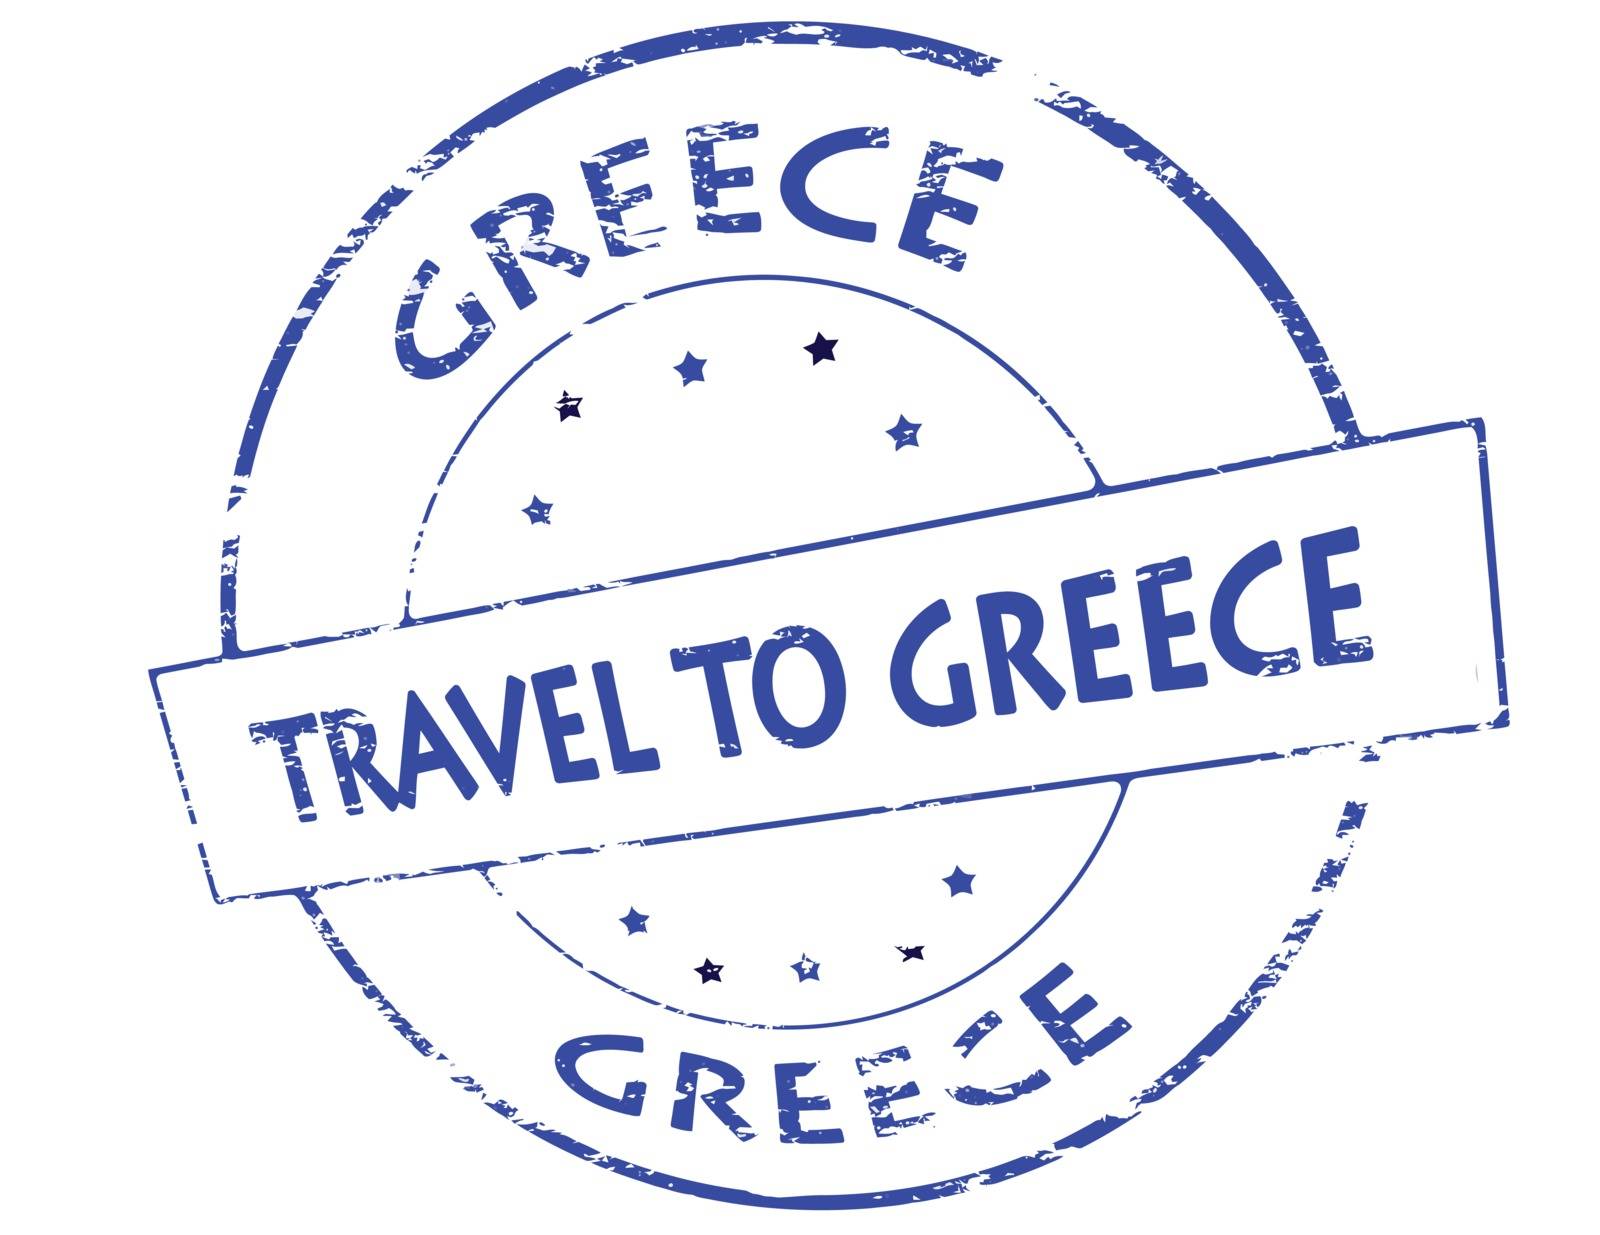 Travel to Greece by carmenbobo